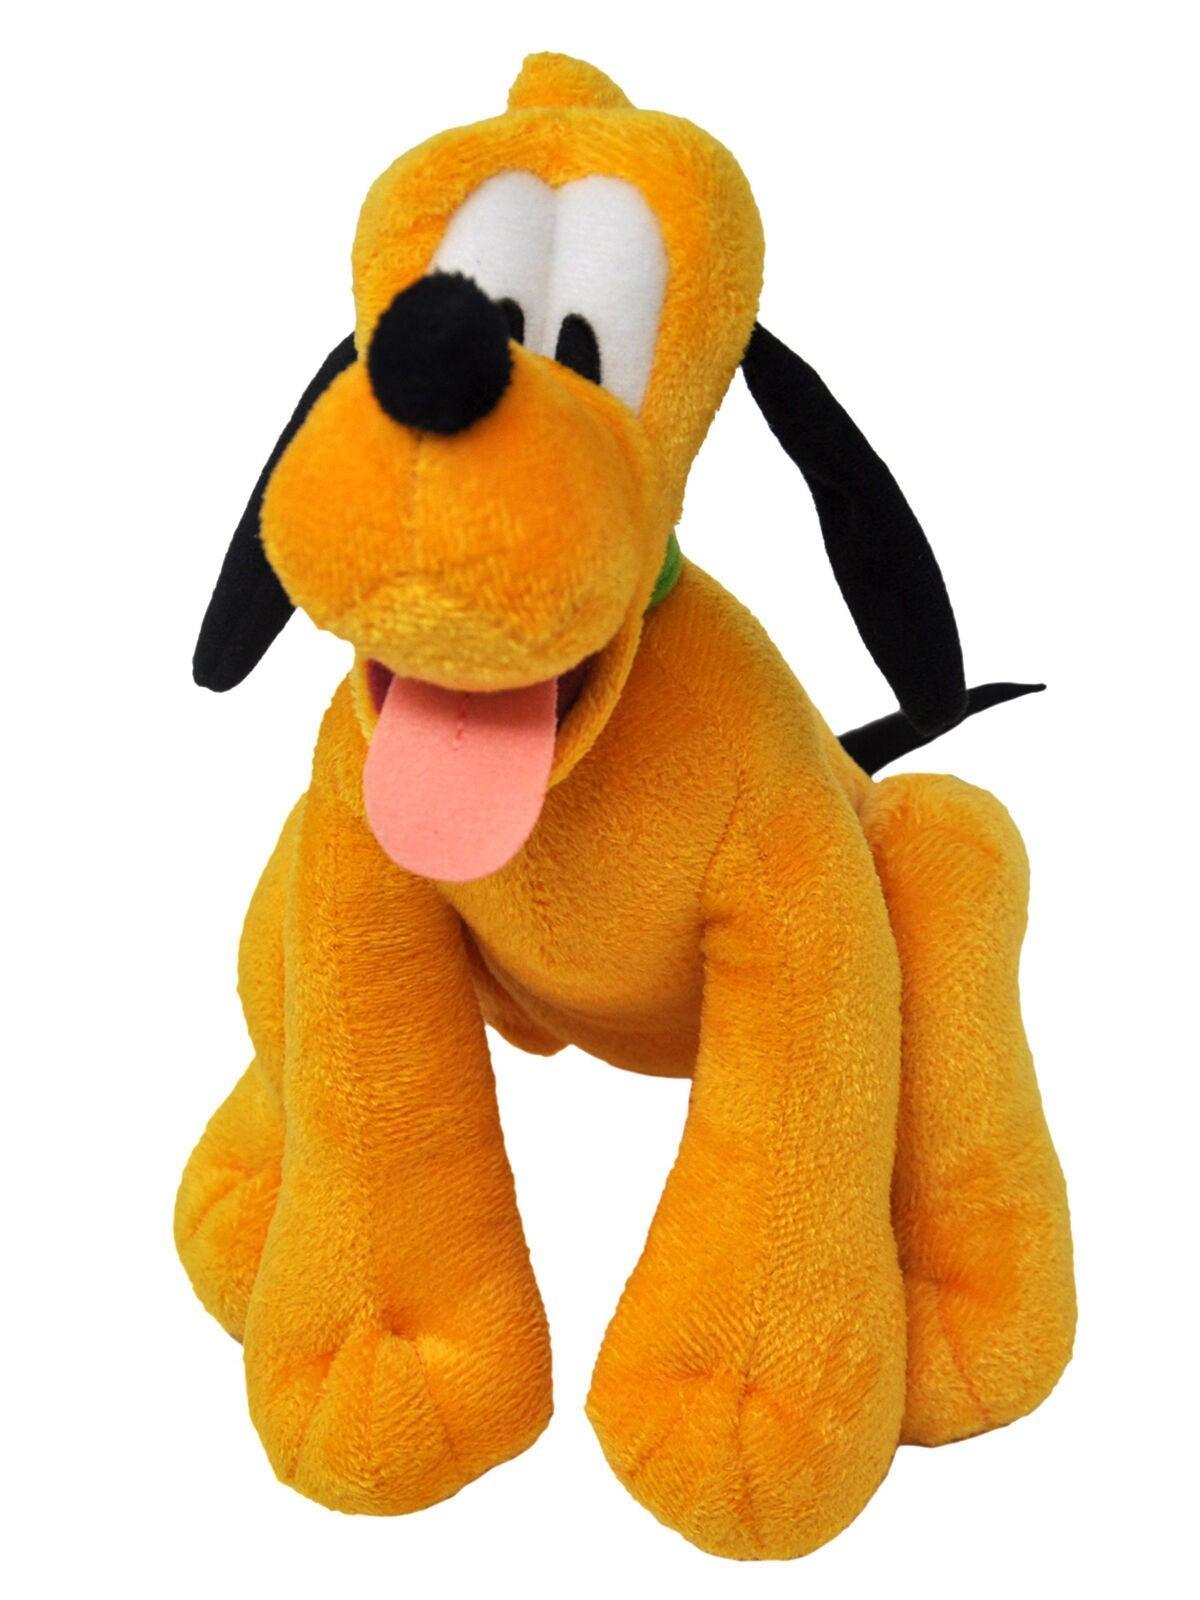 Disney Pluto Stuffed Plush Doll Toy